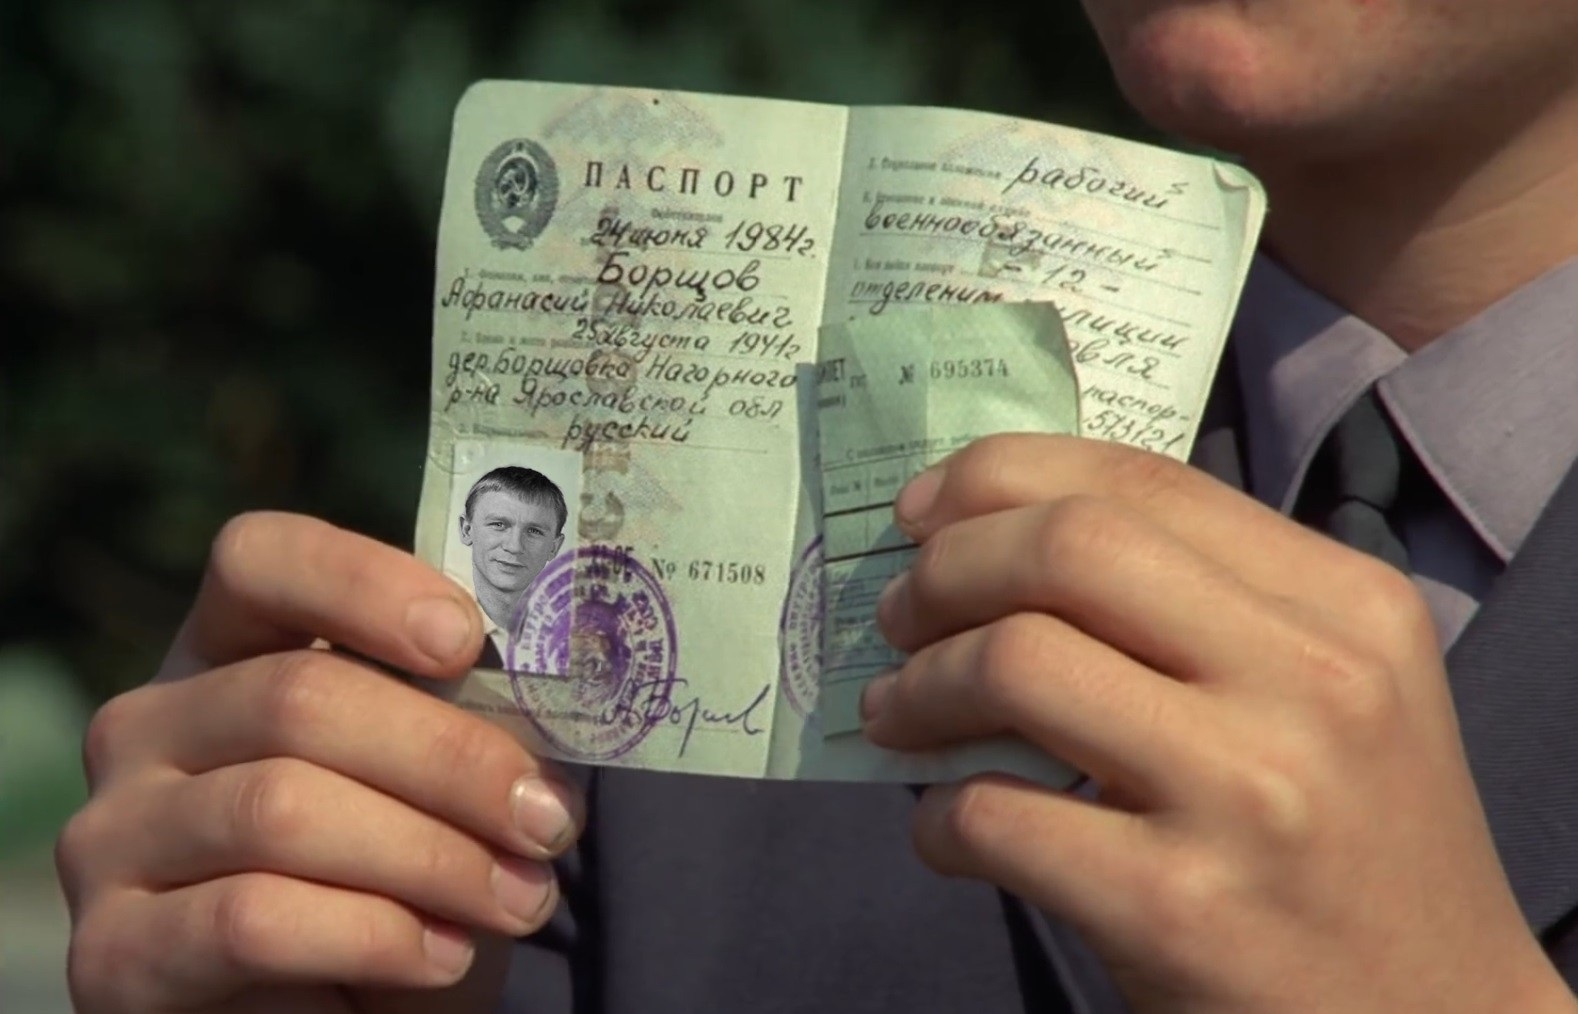 Фотография Афони в паспорте